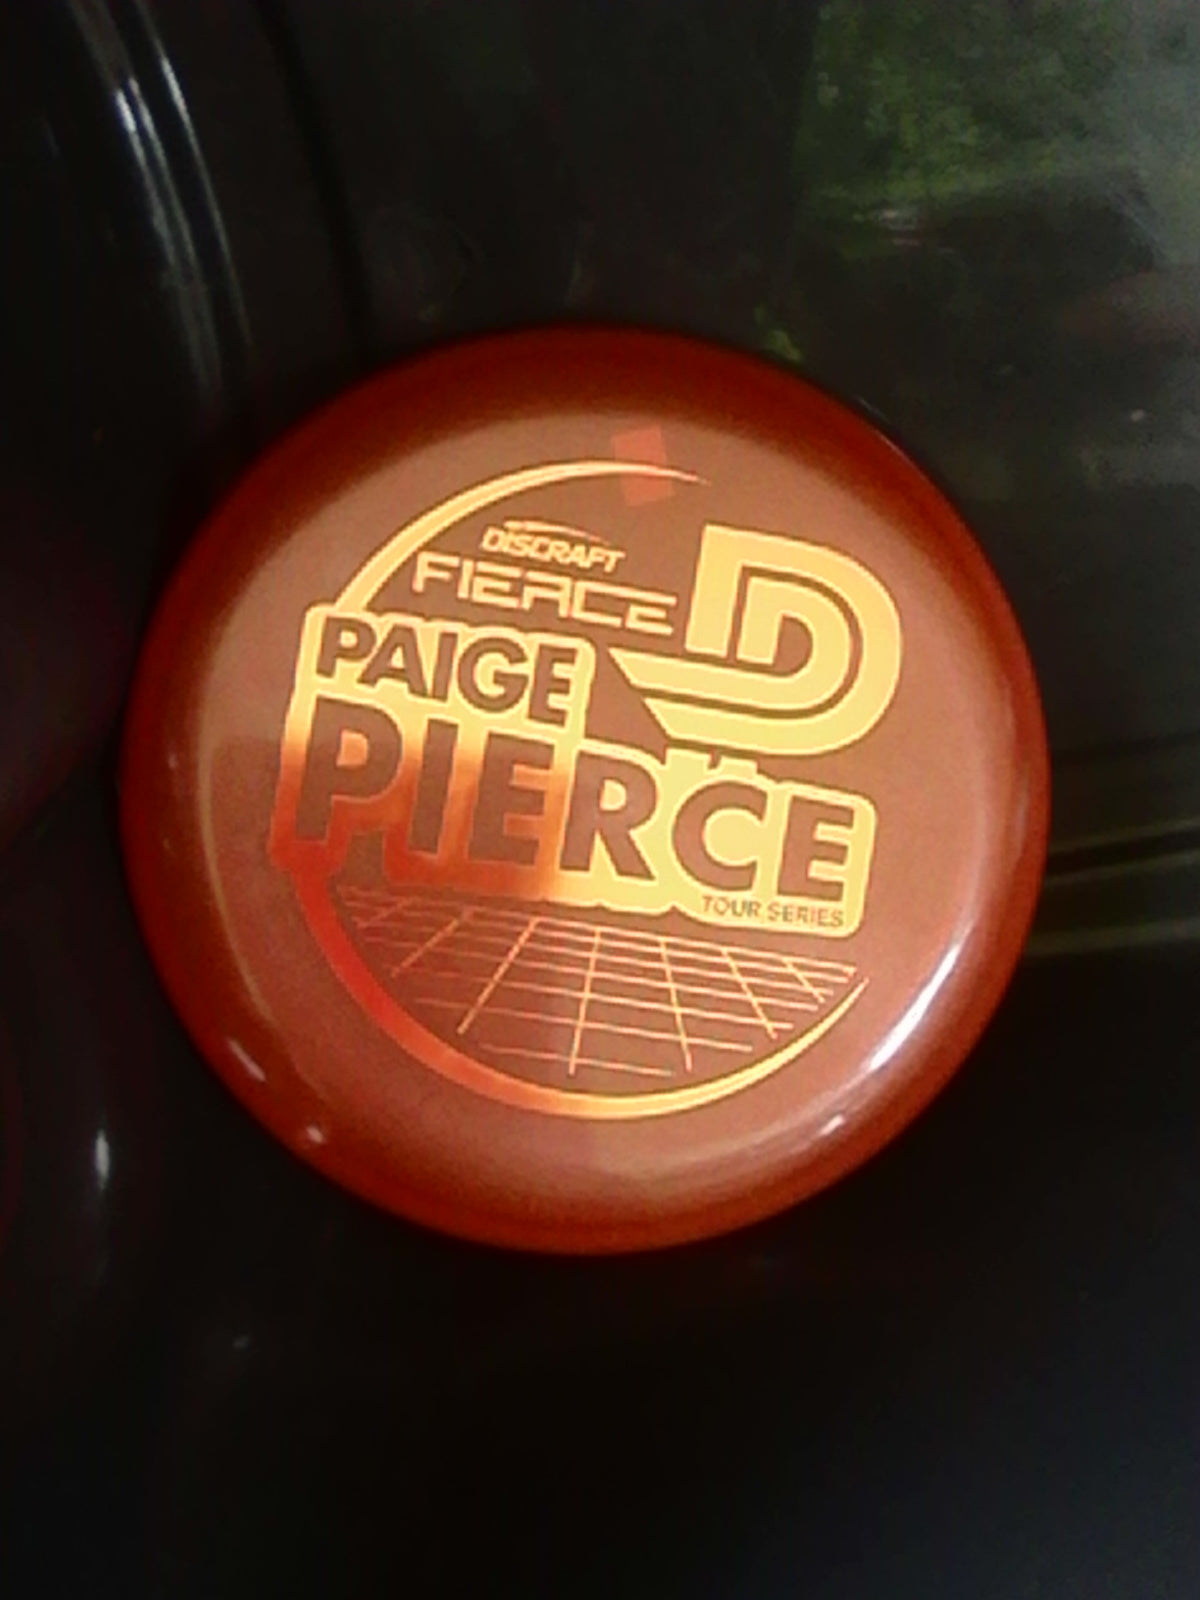 Discraft Tour Series Paige Pierce Fierce 173-174 Grams.